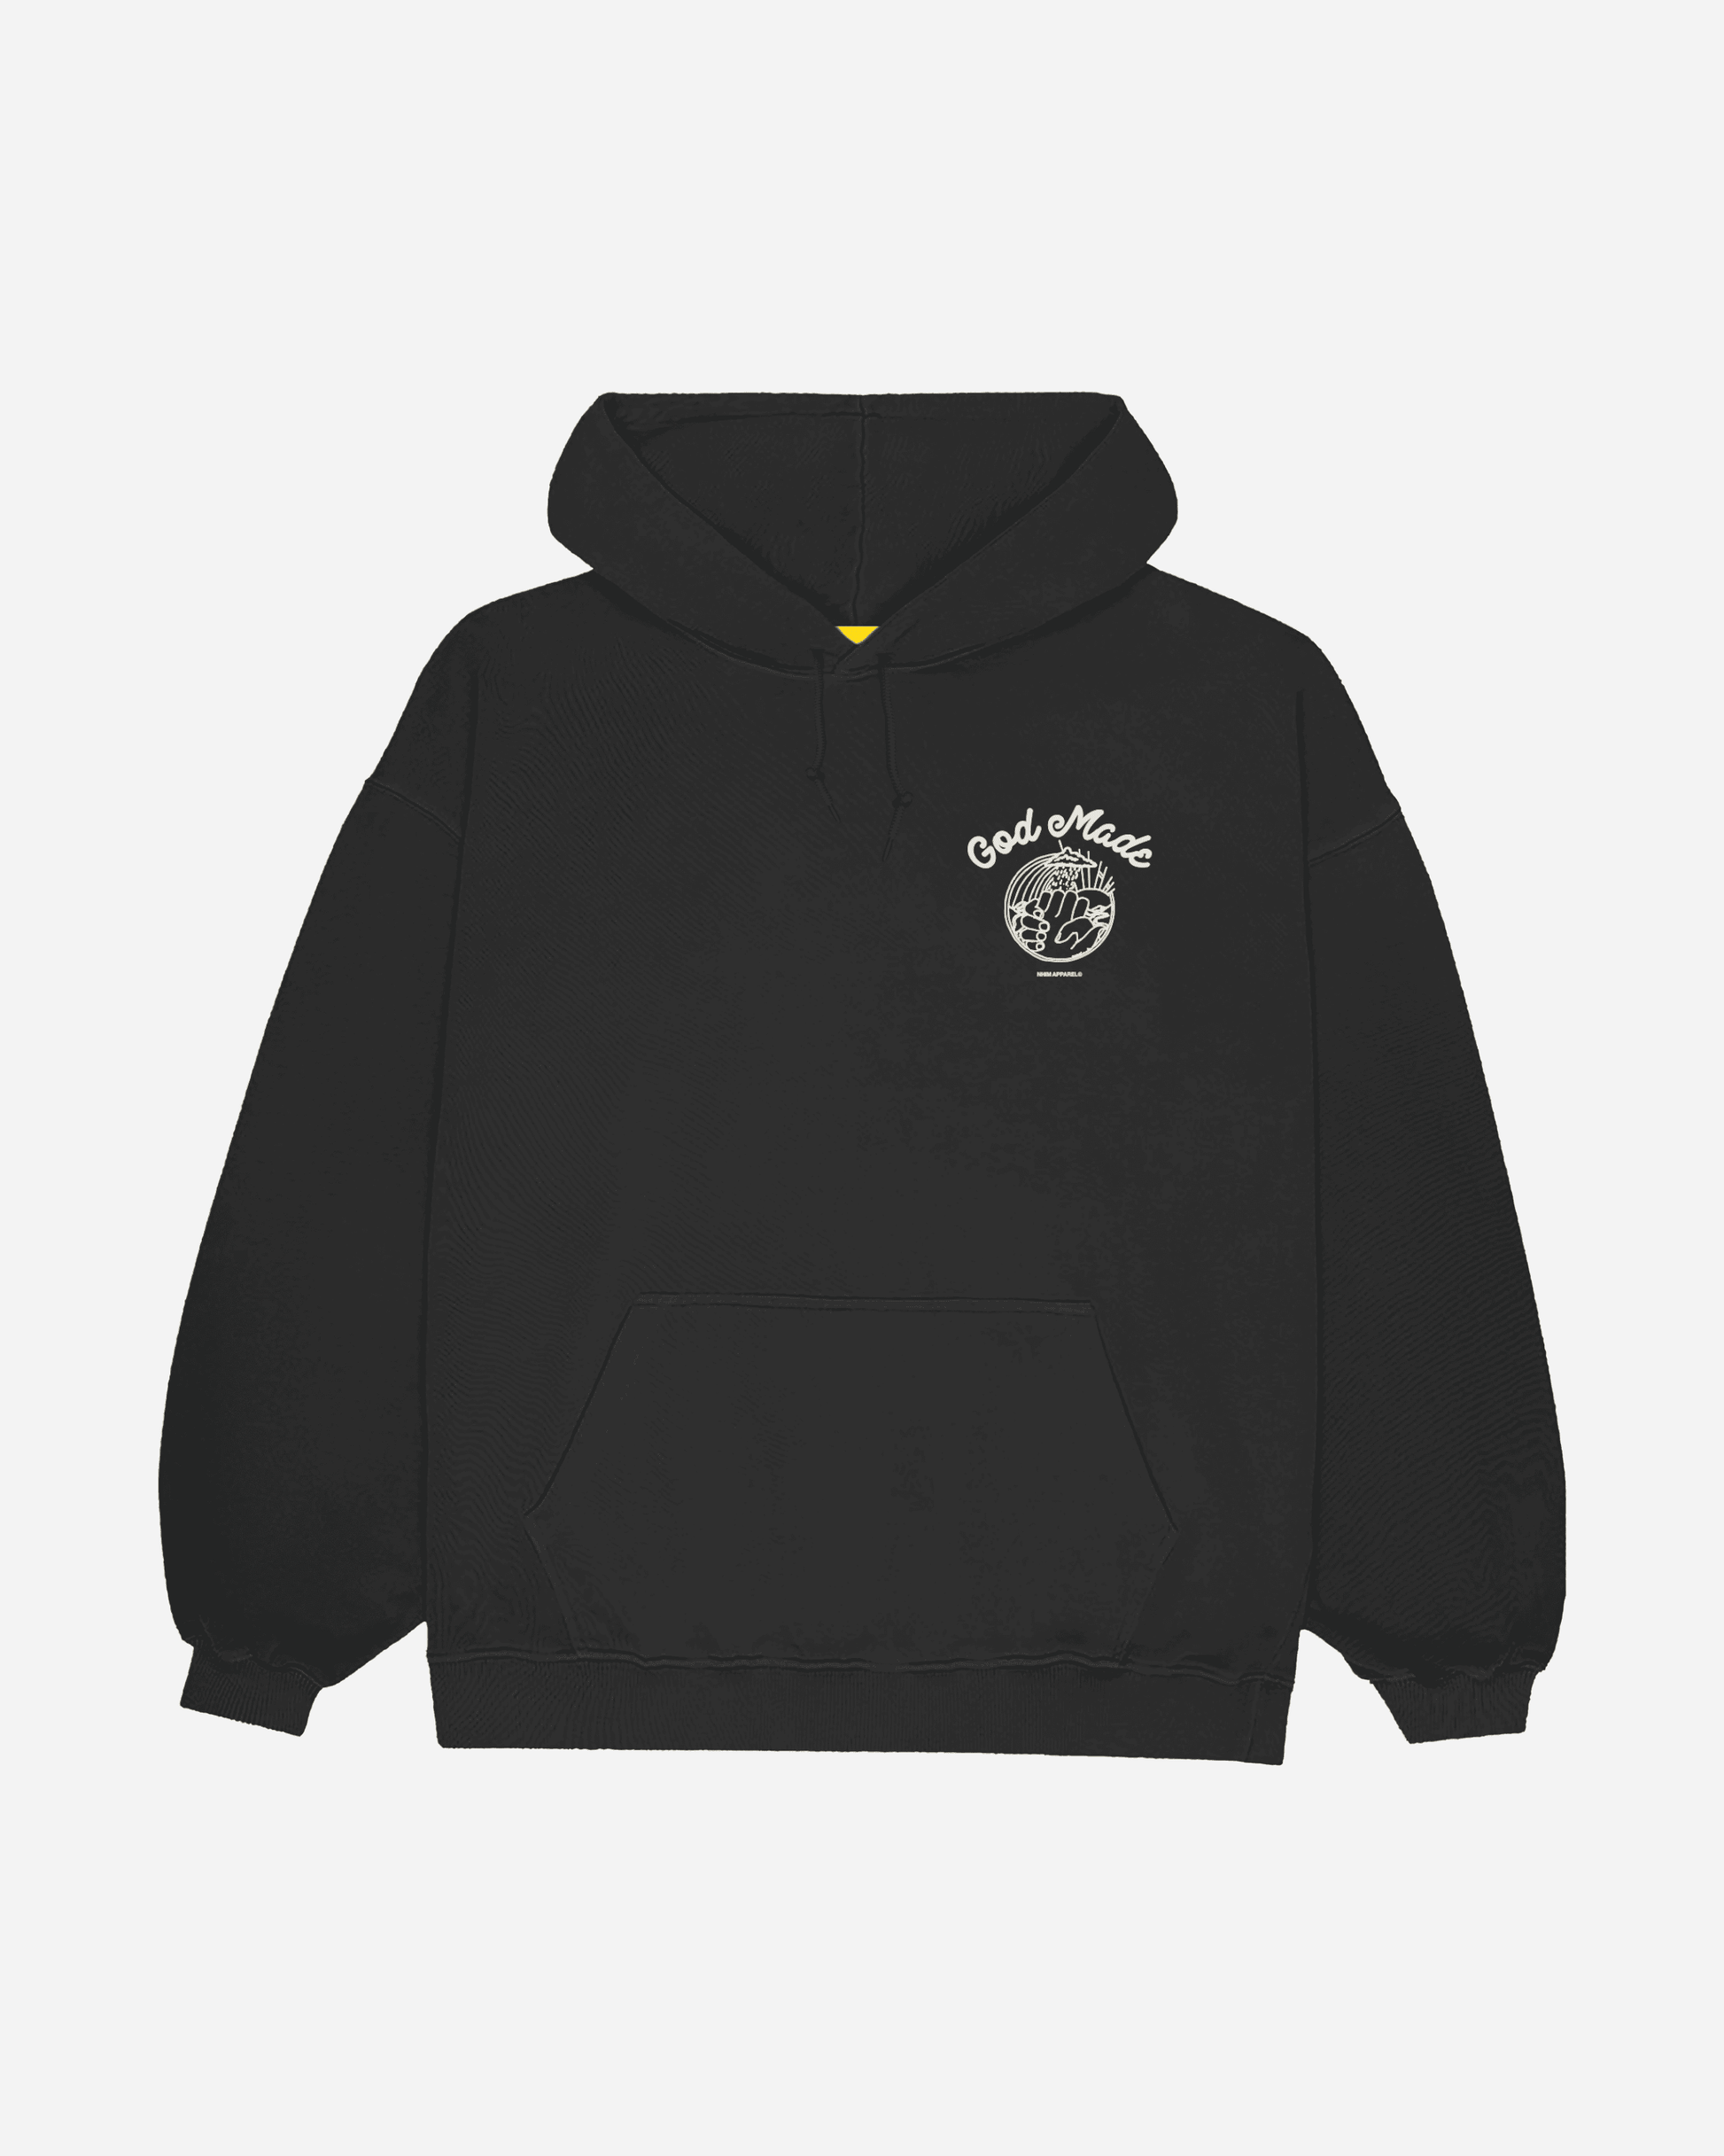 God Is Everywhere black hoodie by NHIM Apparel christian clothing brand